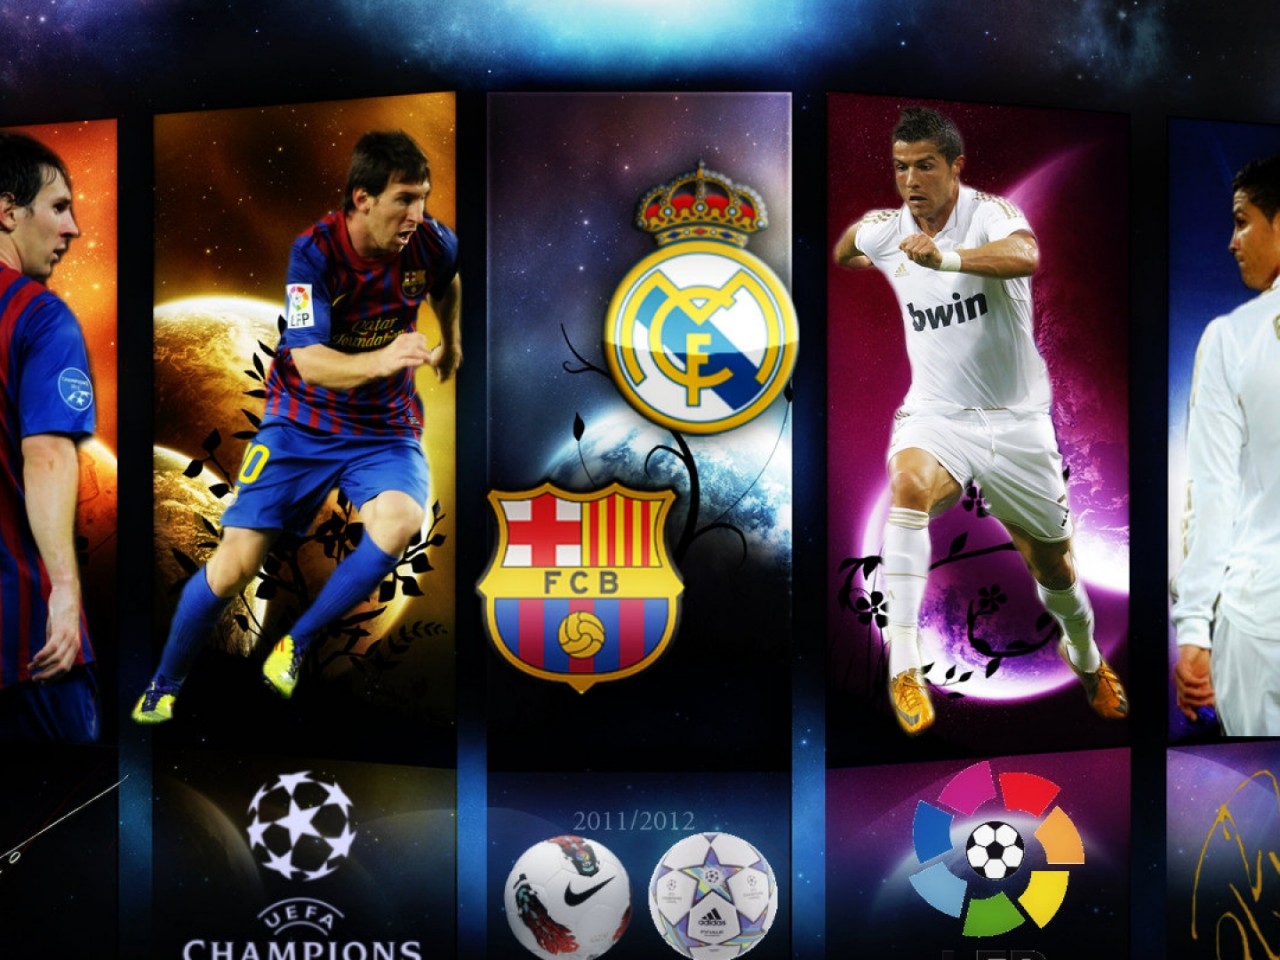 Real Madrid Wallpaper Soccer Wallpaper - High Definition, High Resolution  HD Wallpapers : High Definition, High Resolution HD Wallpapers